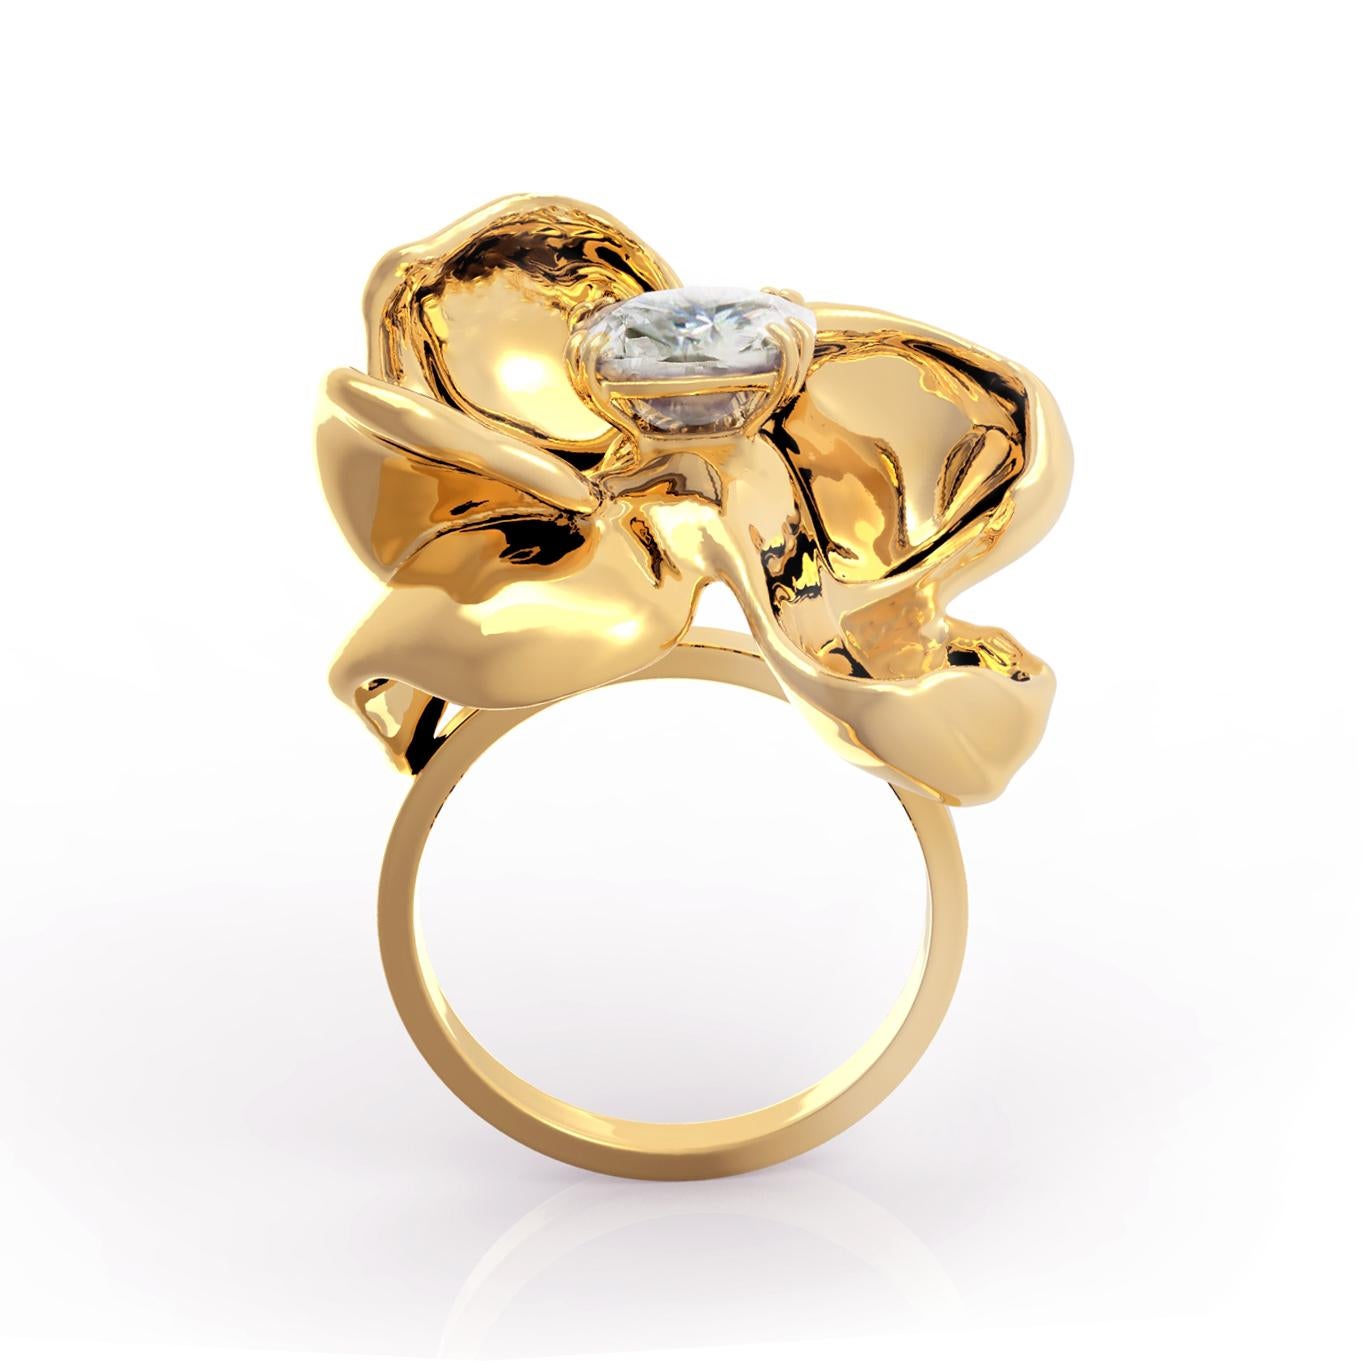 Women's 18 Karat Yellow Gold Engagement Ring with 1 Carat Diamond For Sale